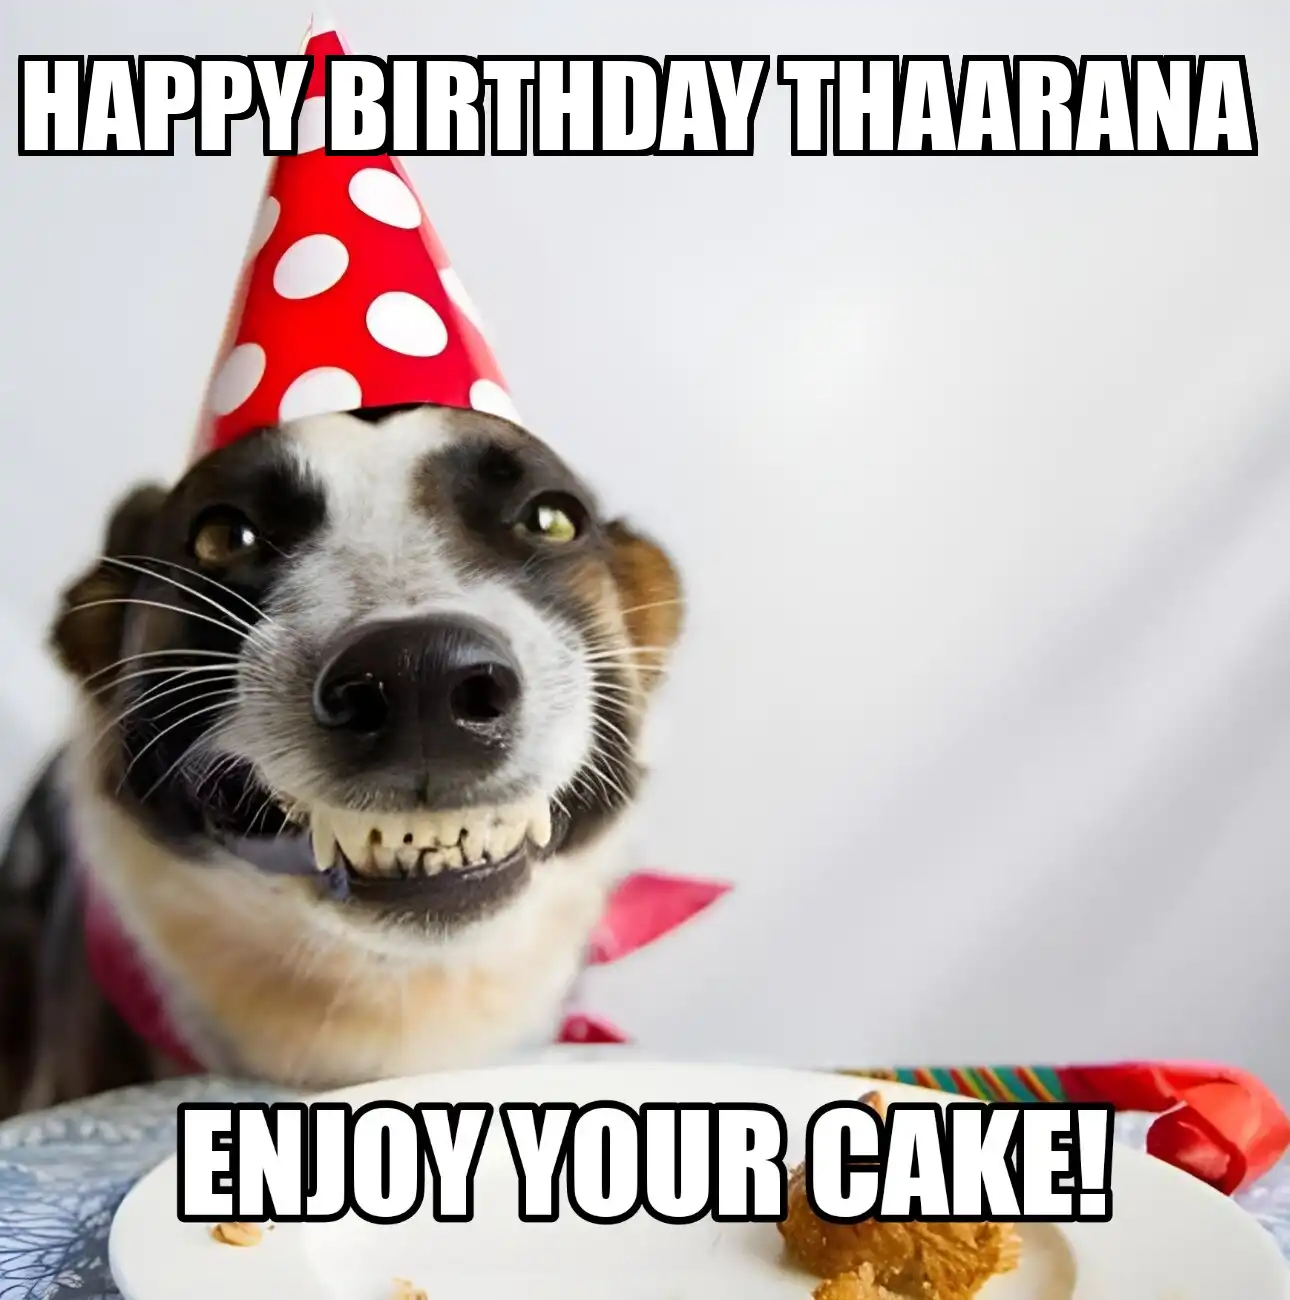 Happy Birthday Thaarana Enjoy Your Cake Dog Meme